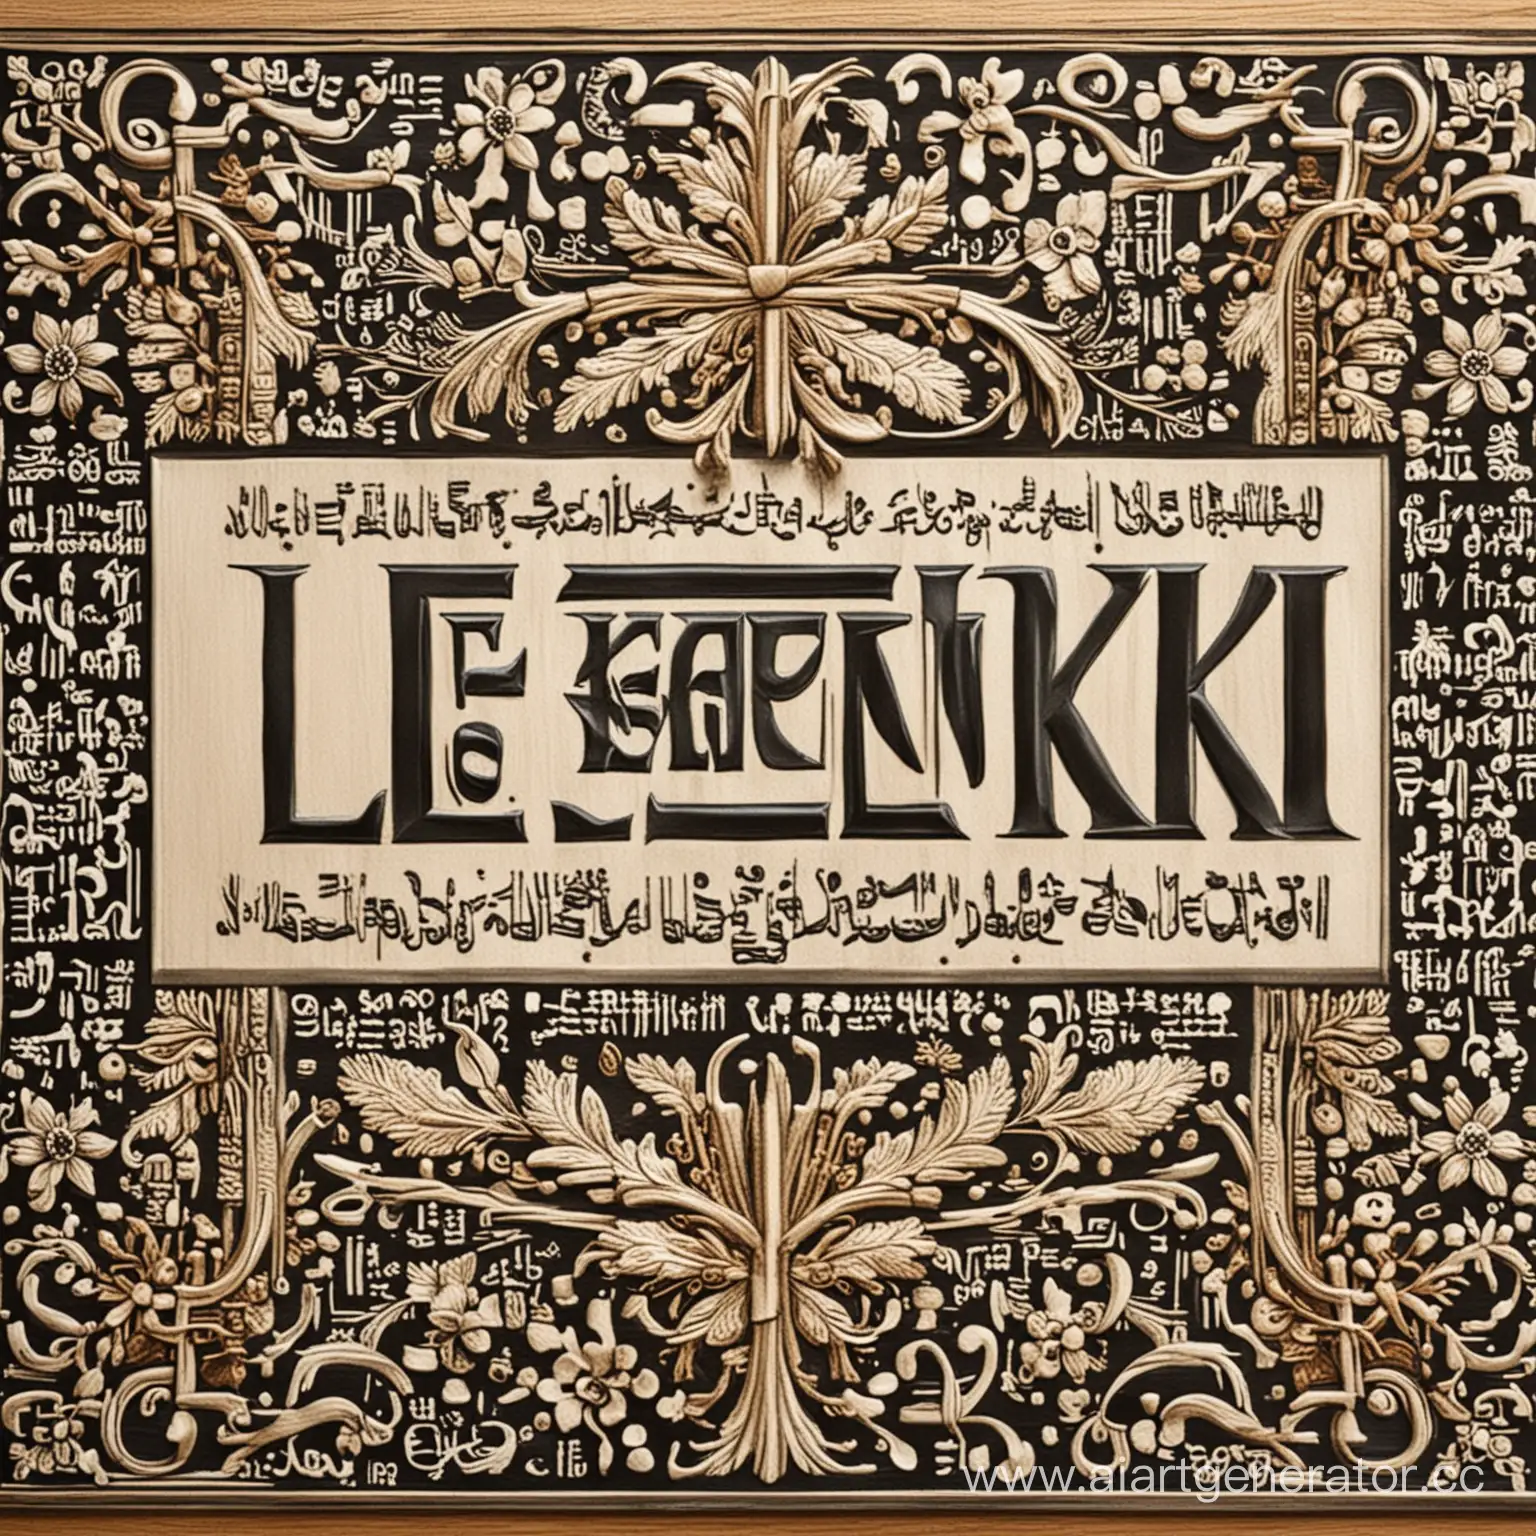 Finnish-Style-Inscription-Lejeerinki-with-Traditional-Finnish-Pattern